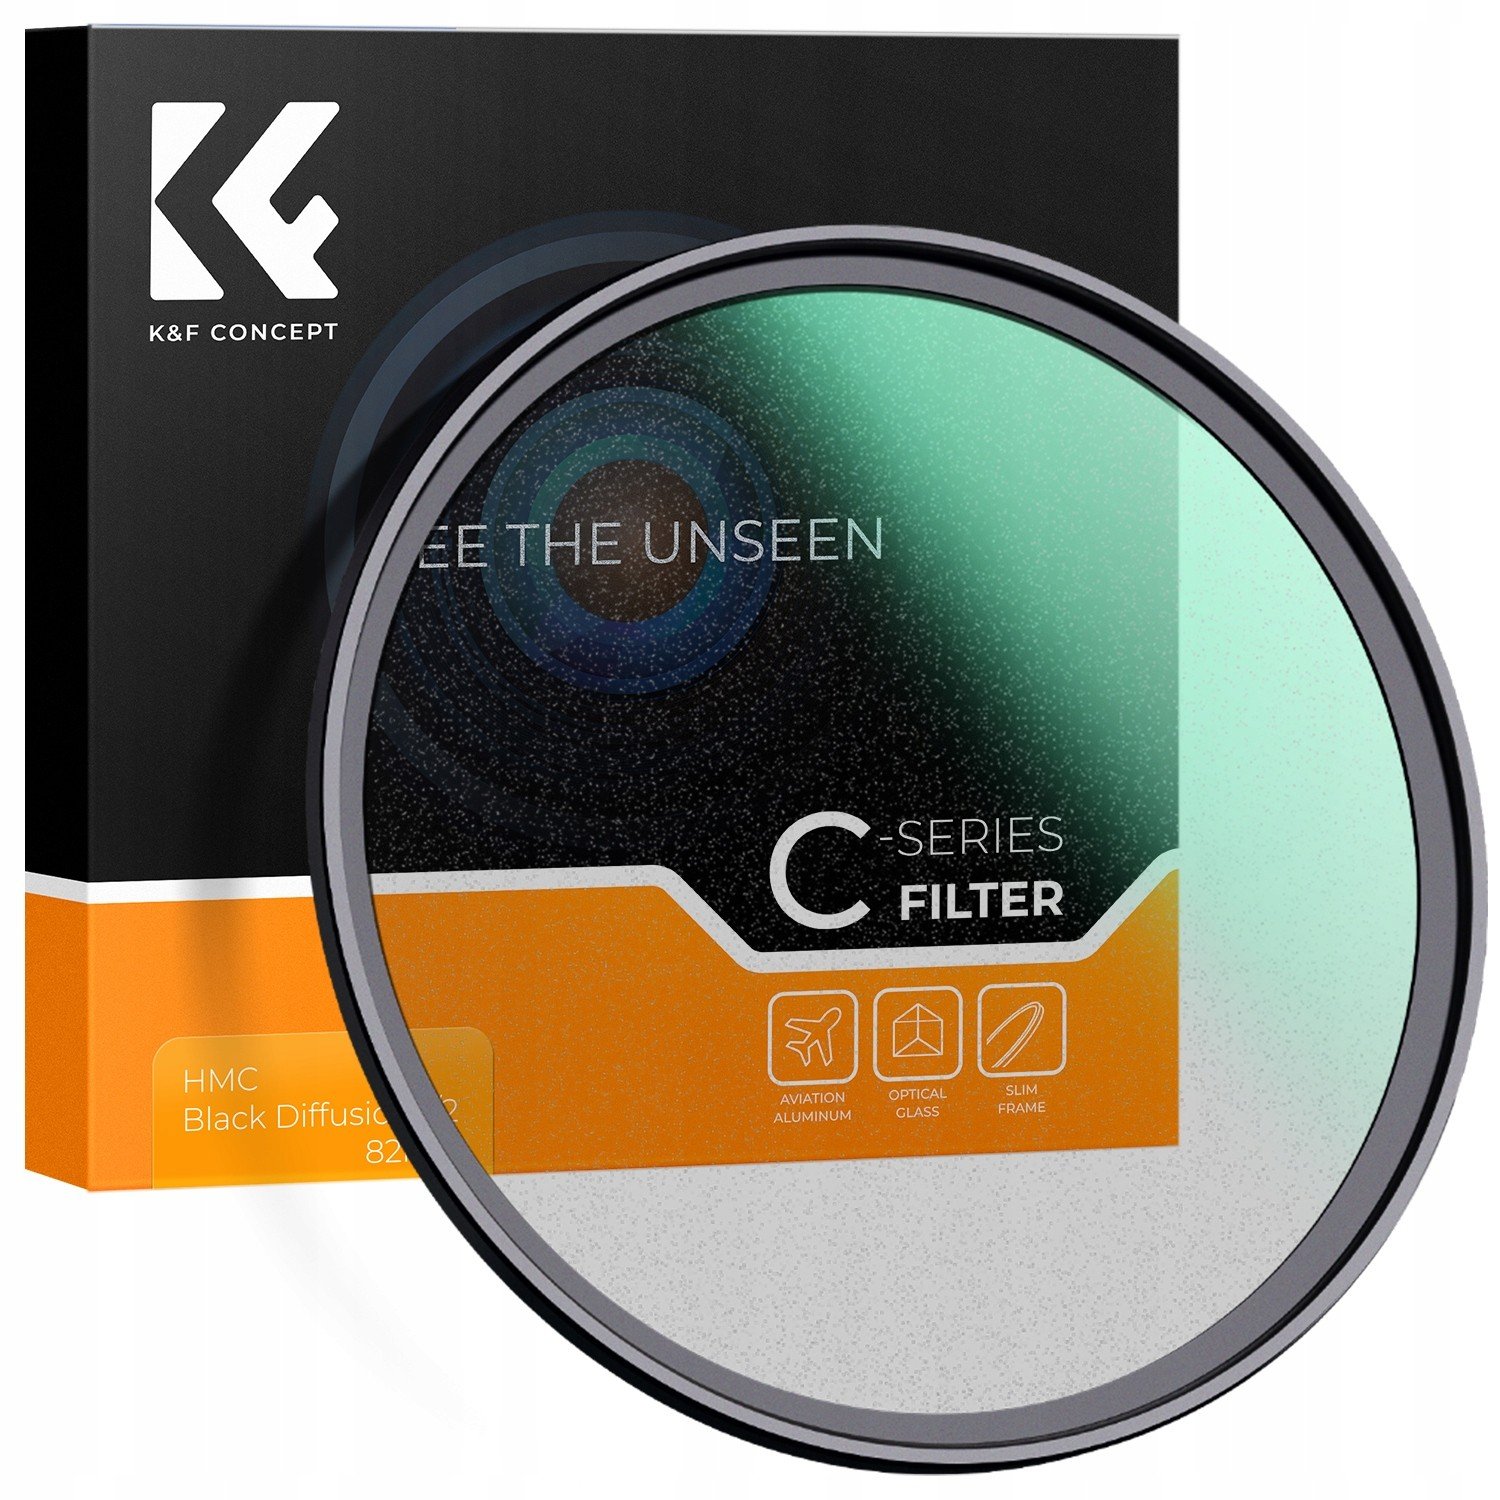 Difuzní filtr Black Mist 1/2 58mm Nano-C K&f